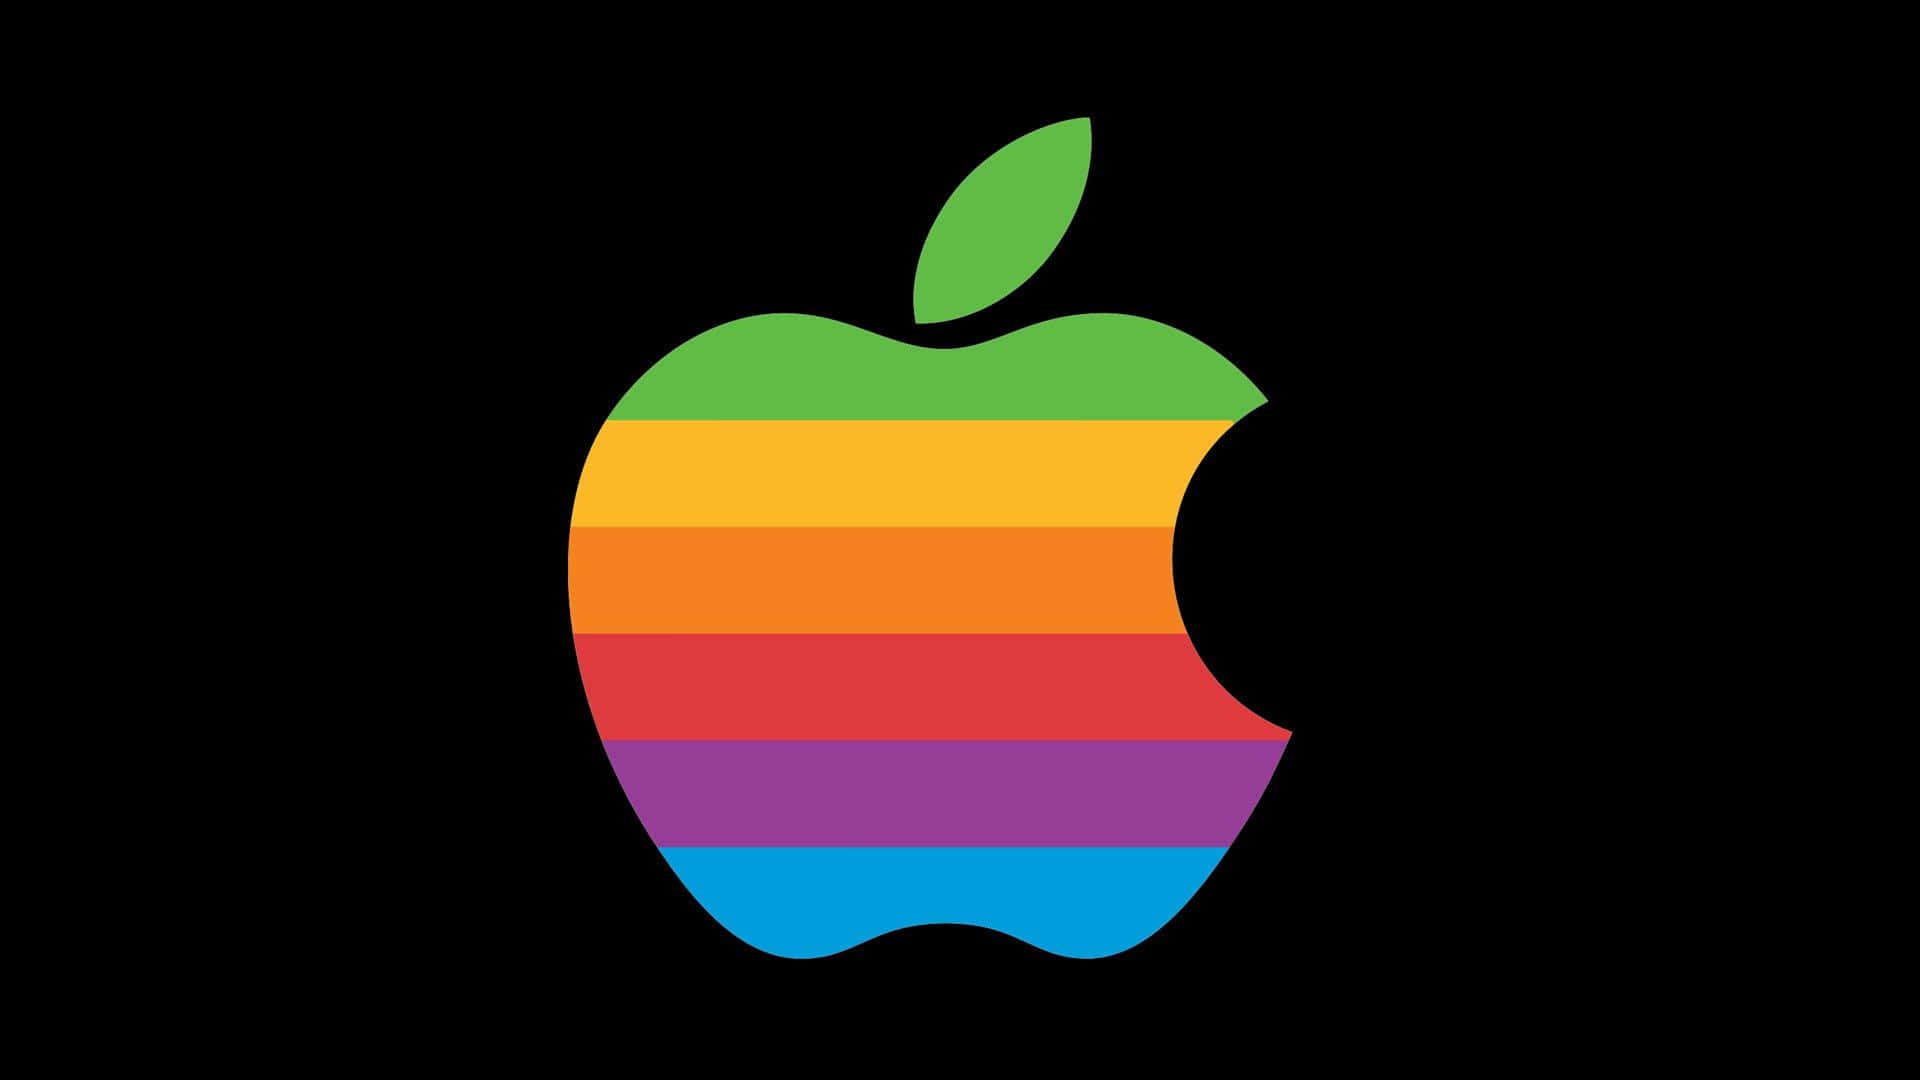 Ennostalgisk Titt På Den Klassiska Apple-logotypen. Wallpaper